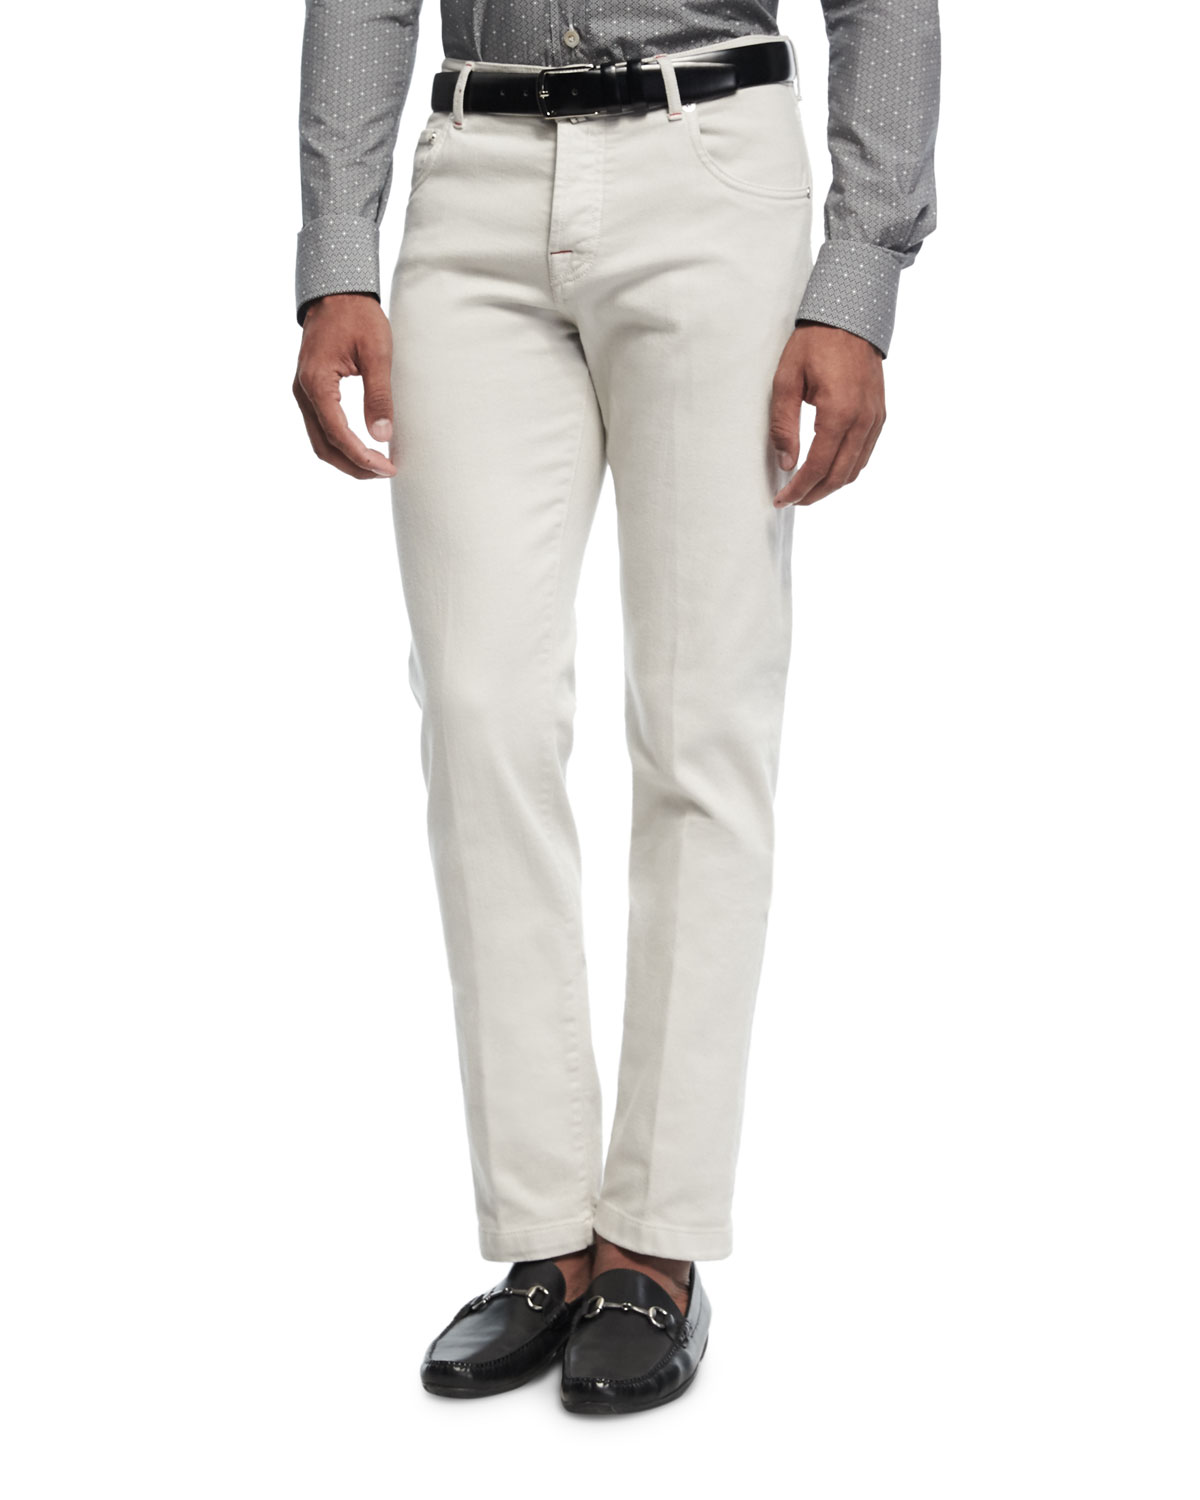 Neiman Marcus Men's White Jeans